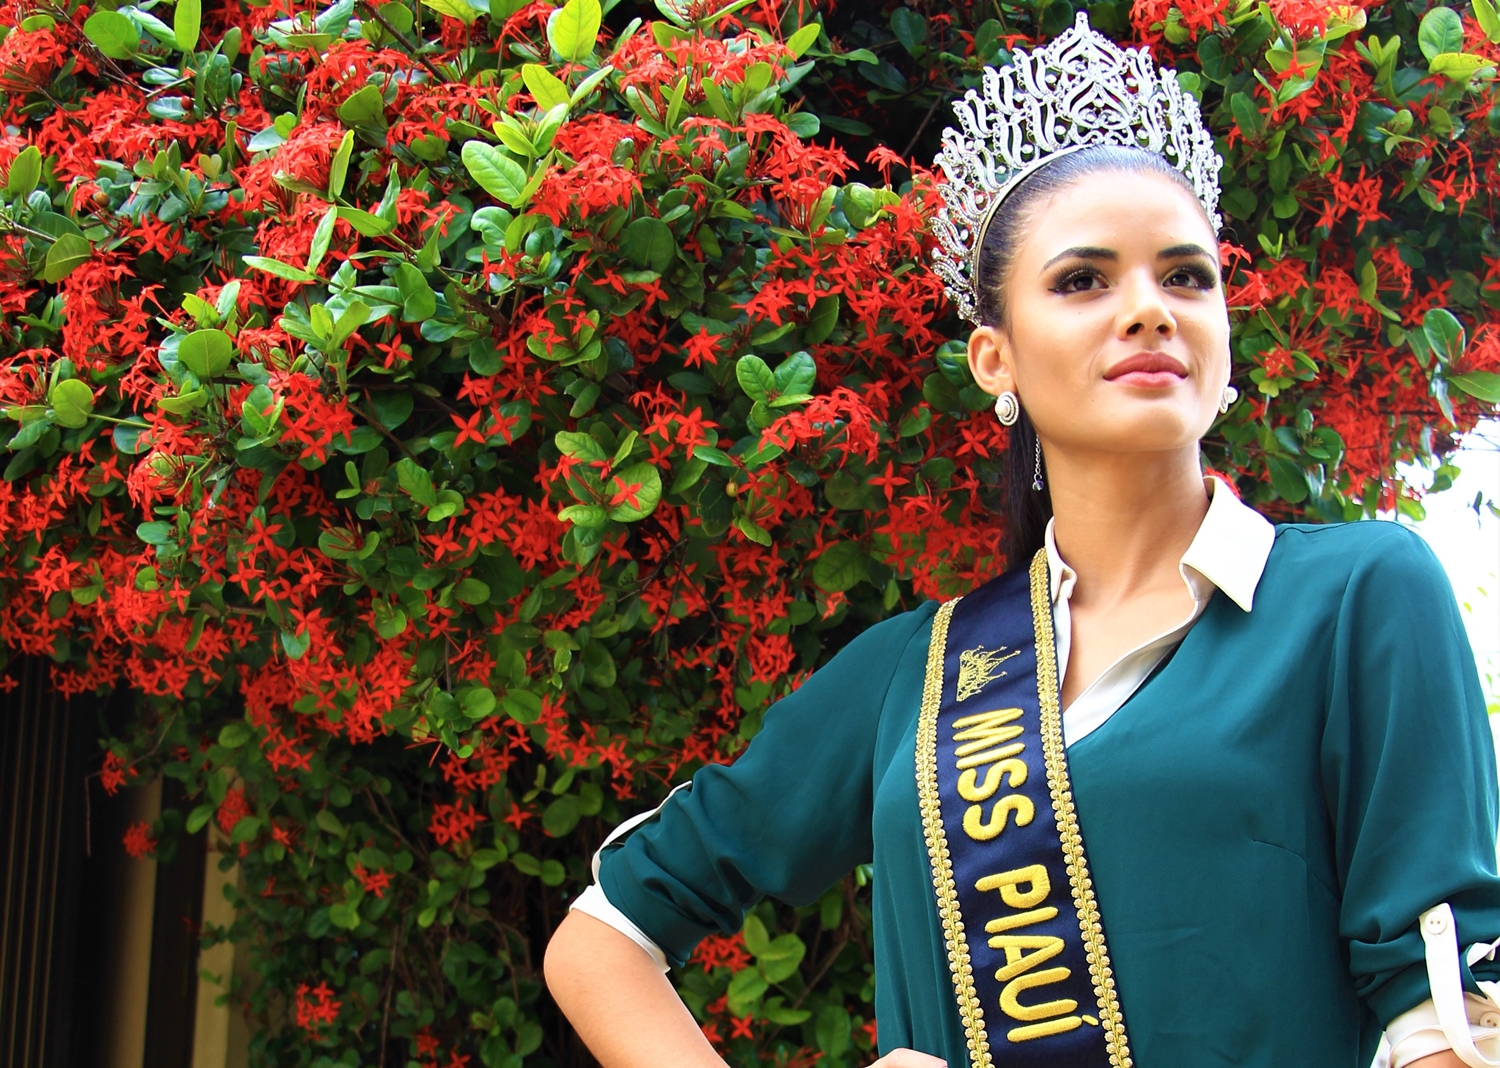 Miss Piauí 2019 Dagmara Landim